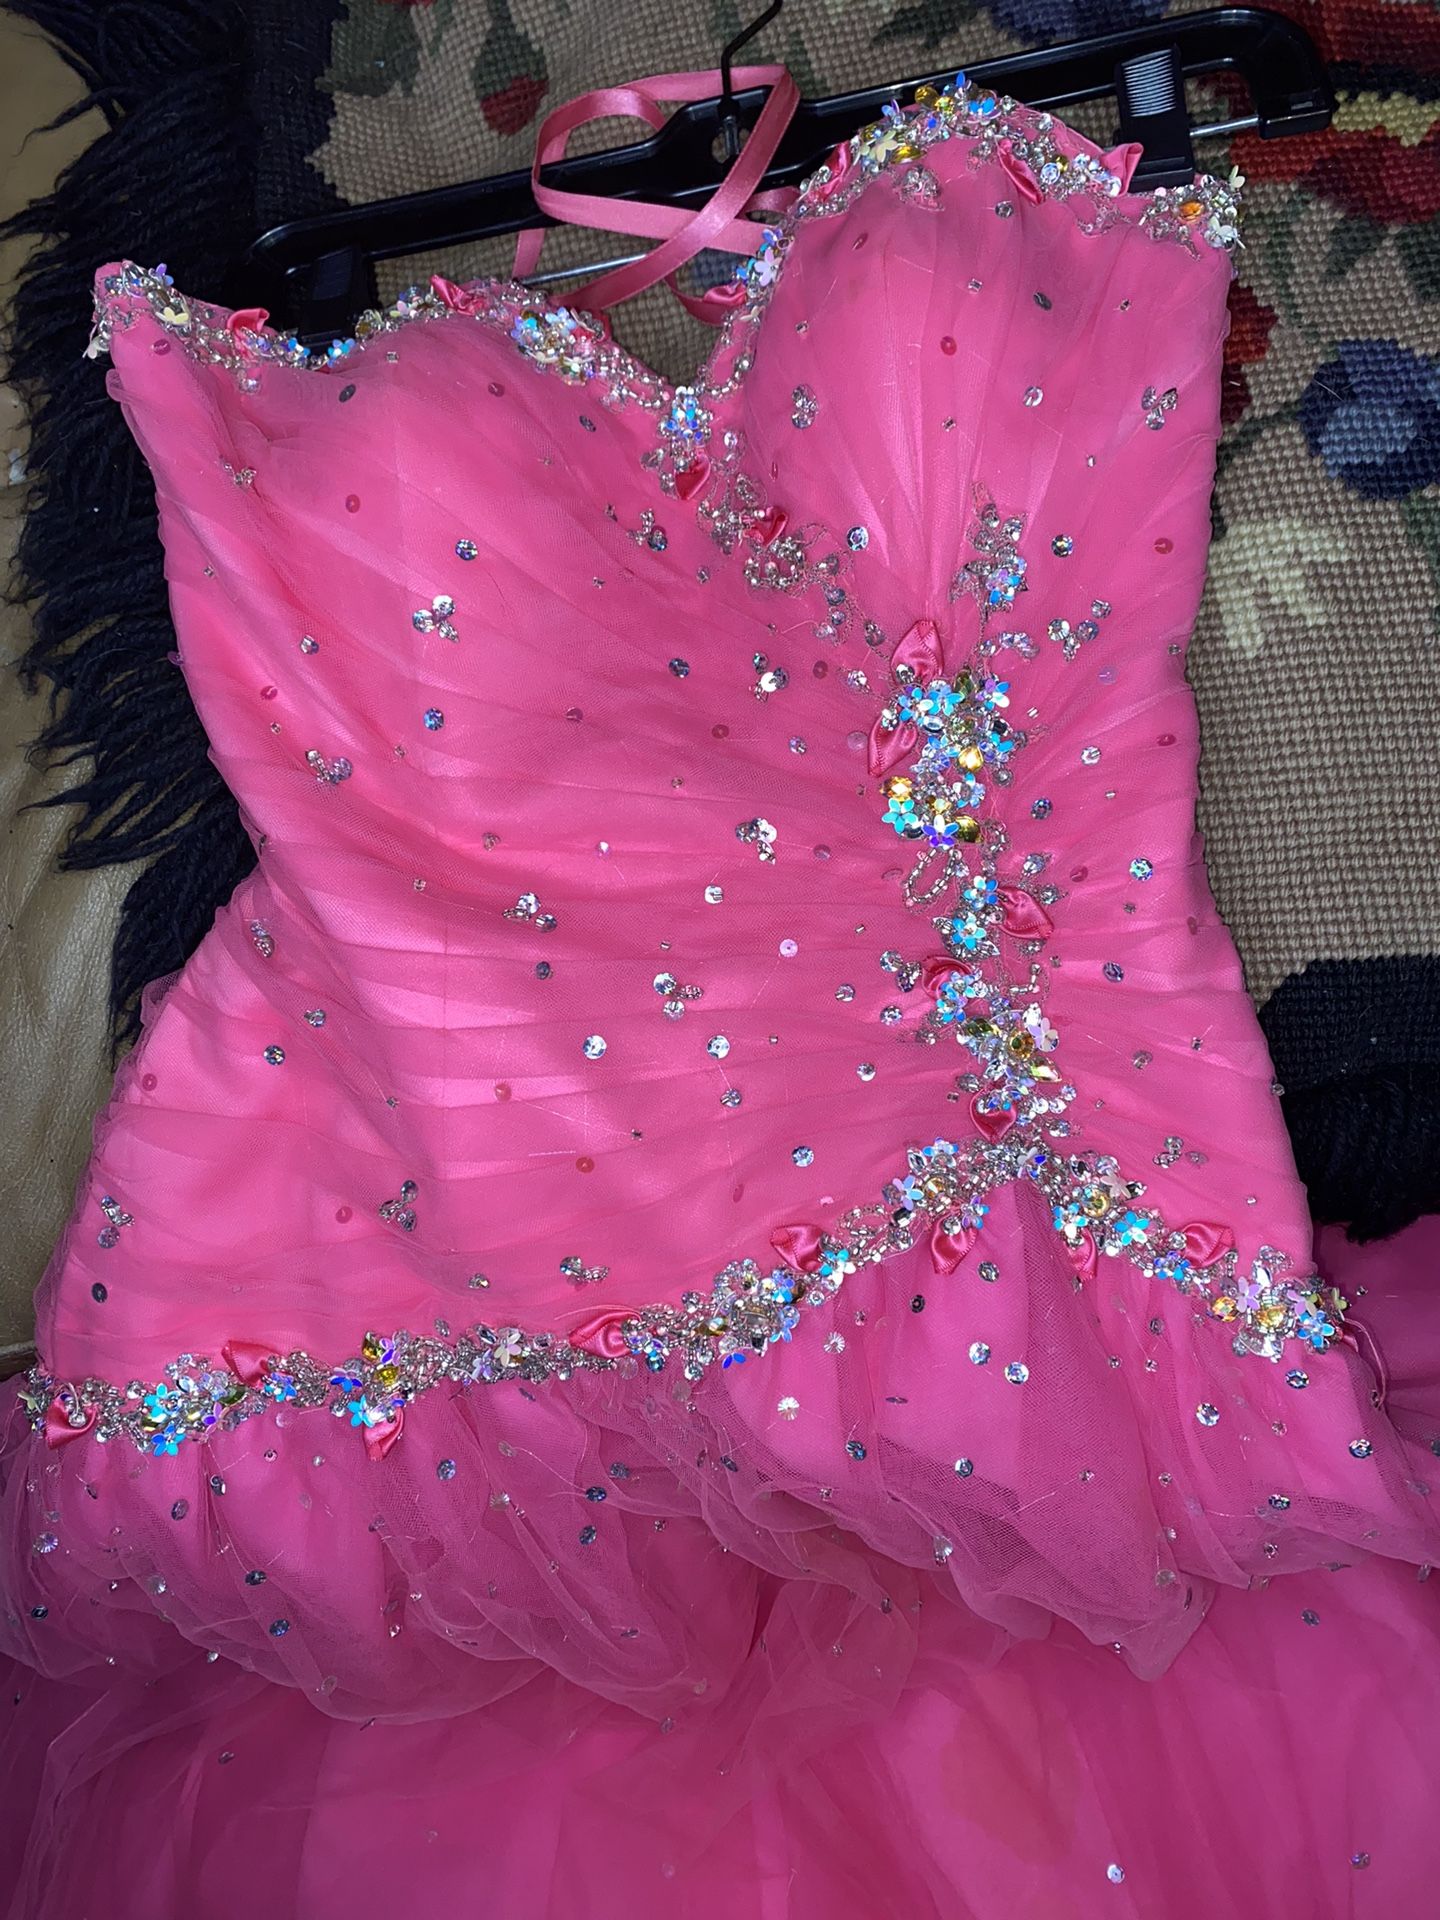  Pink Prom Dress Size 5/6